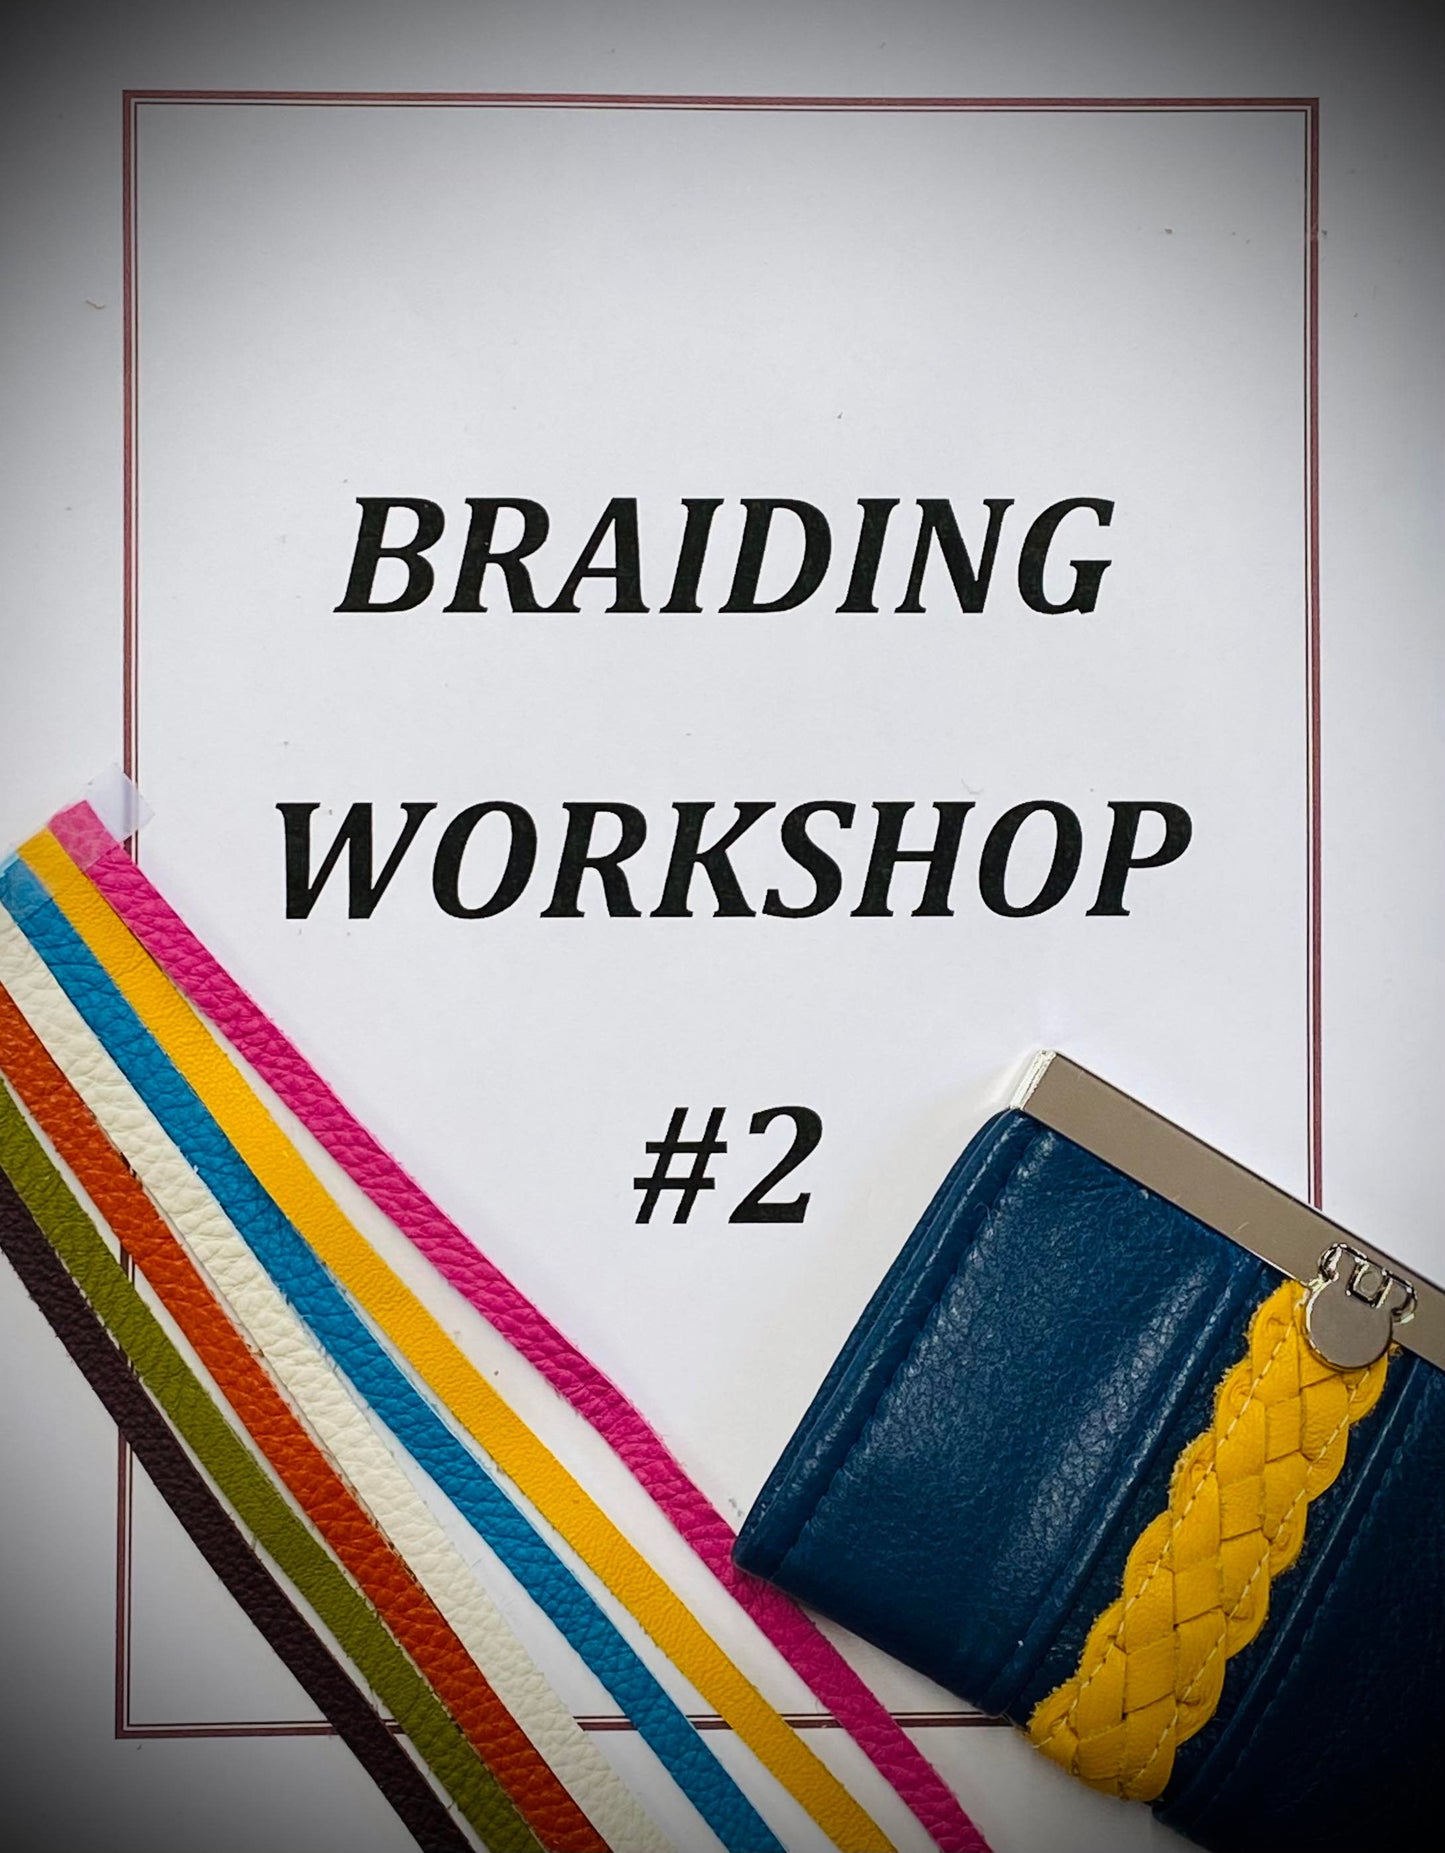 Braiding Workshop #2- Session 3